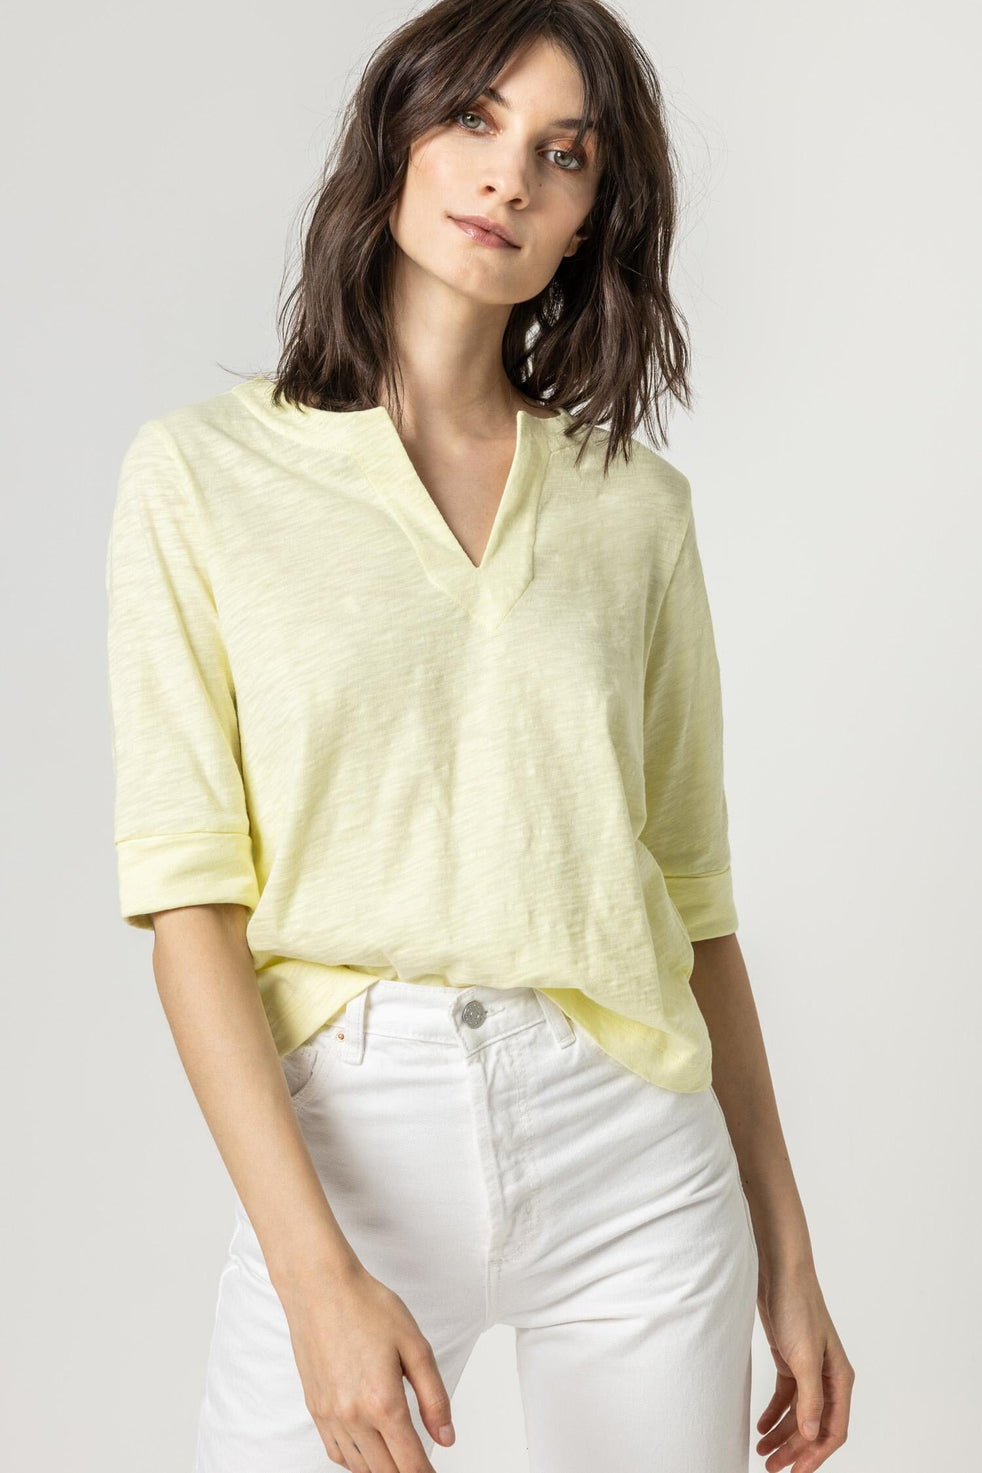 Women's Tops on Sale | Short & Long Sleeve Cotton Shirts for Women